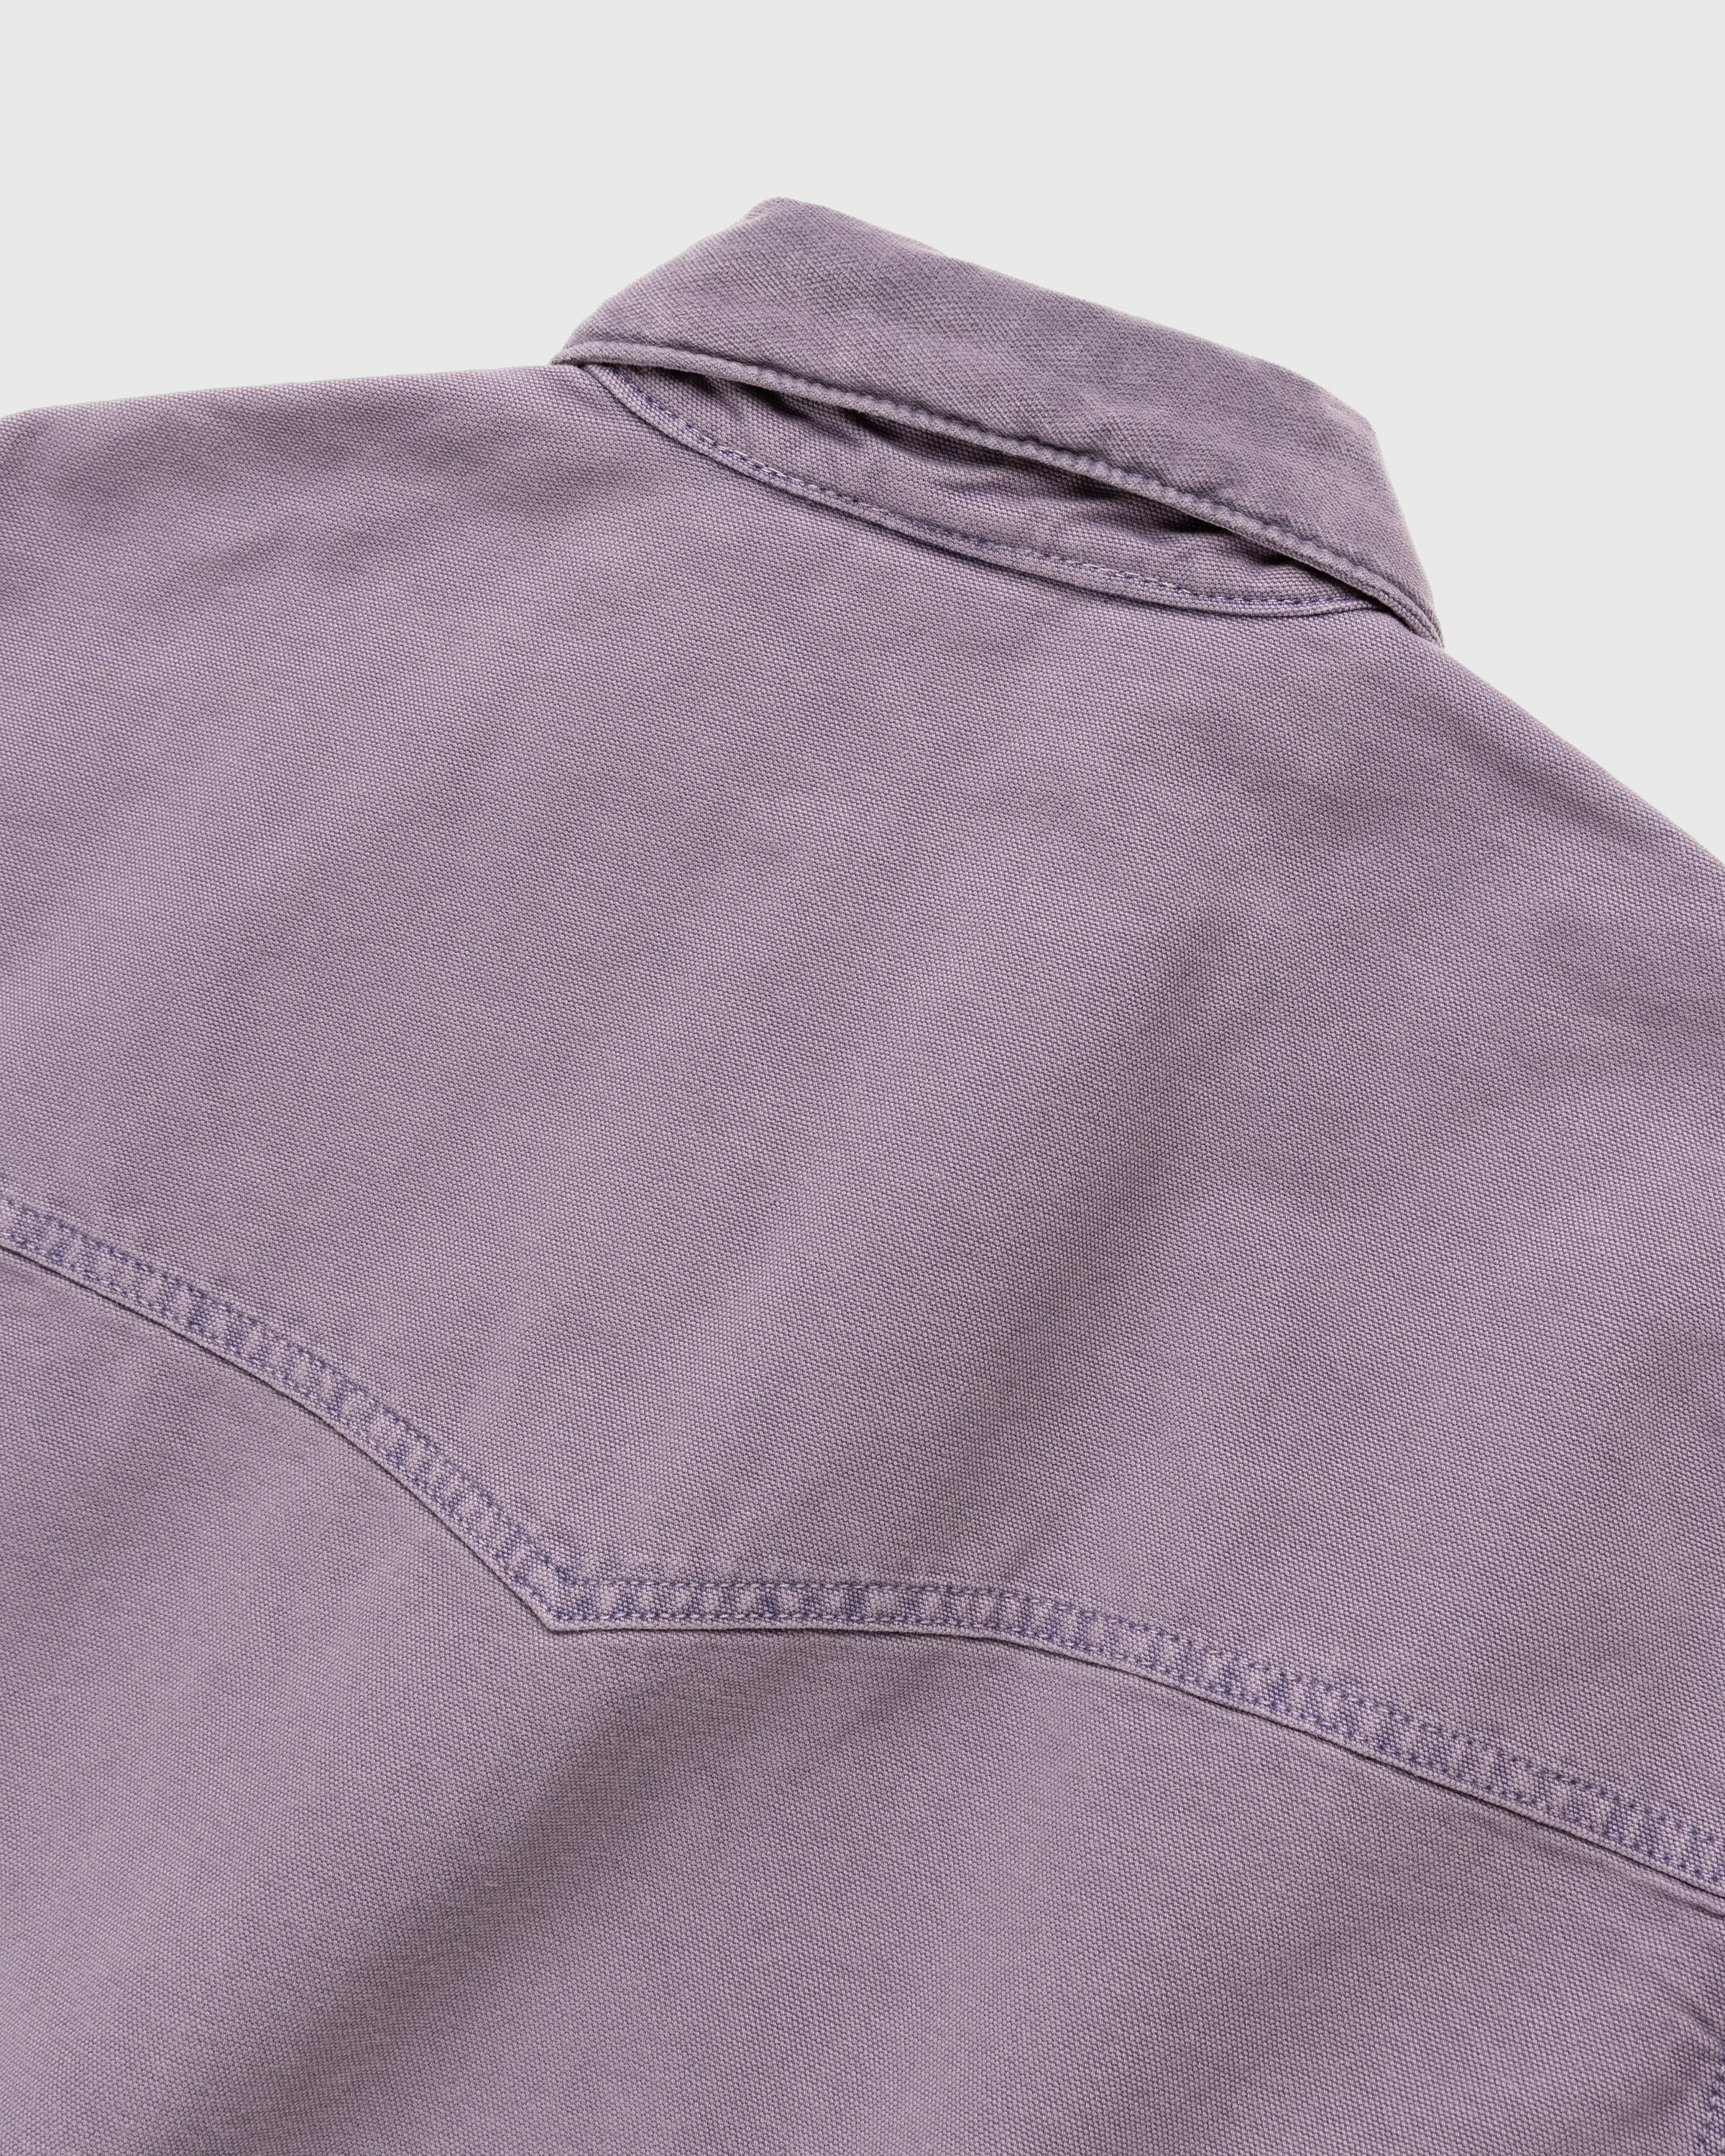 Carhartt WIP - OG Santa Fe Jacket Razzmic Faded - Clothing - Purple - Image 6